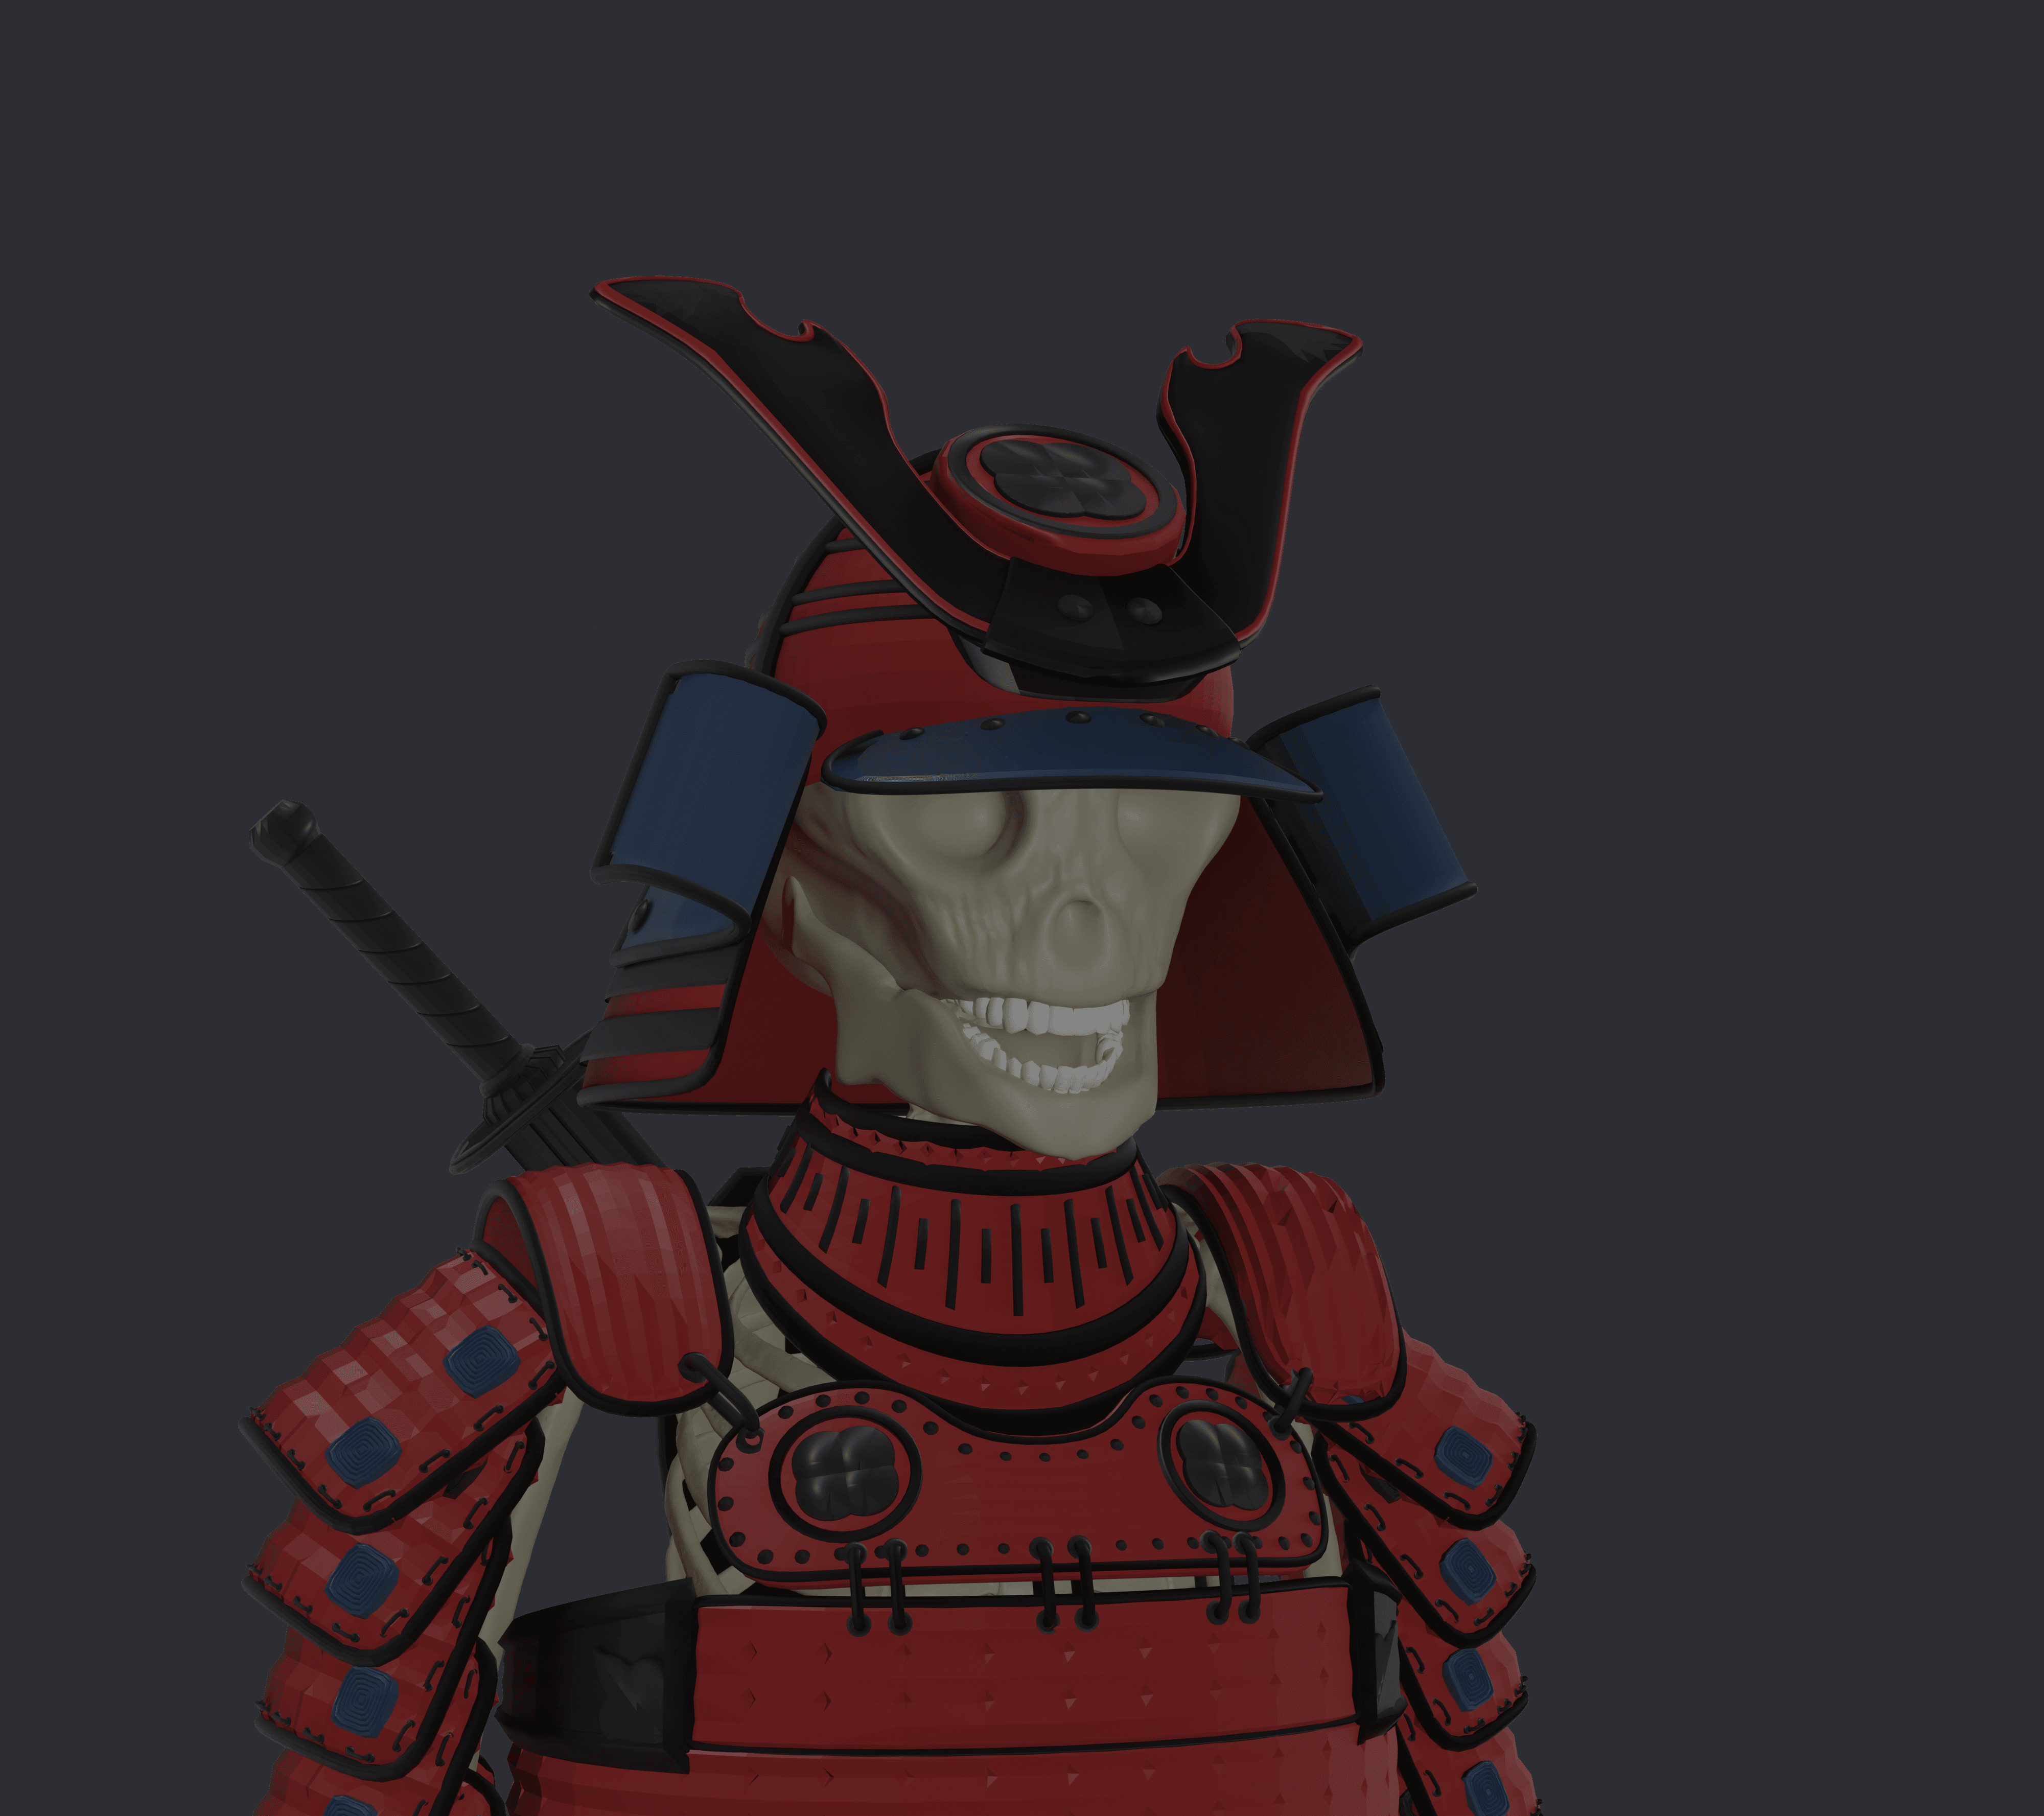 Samurai Style